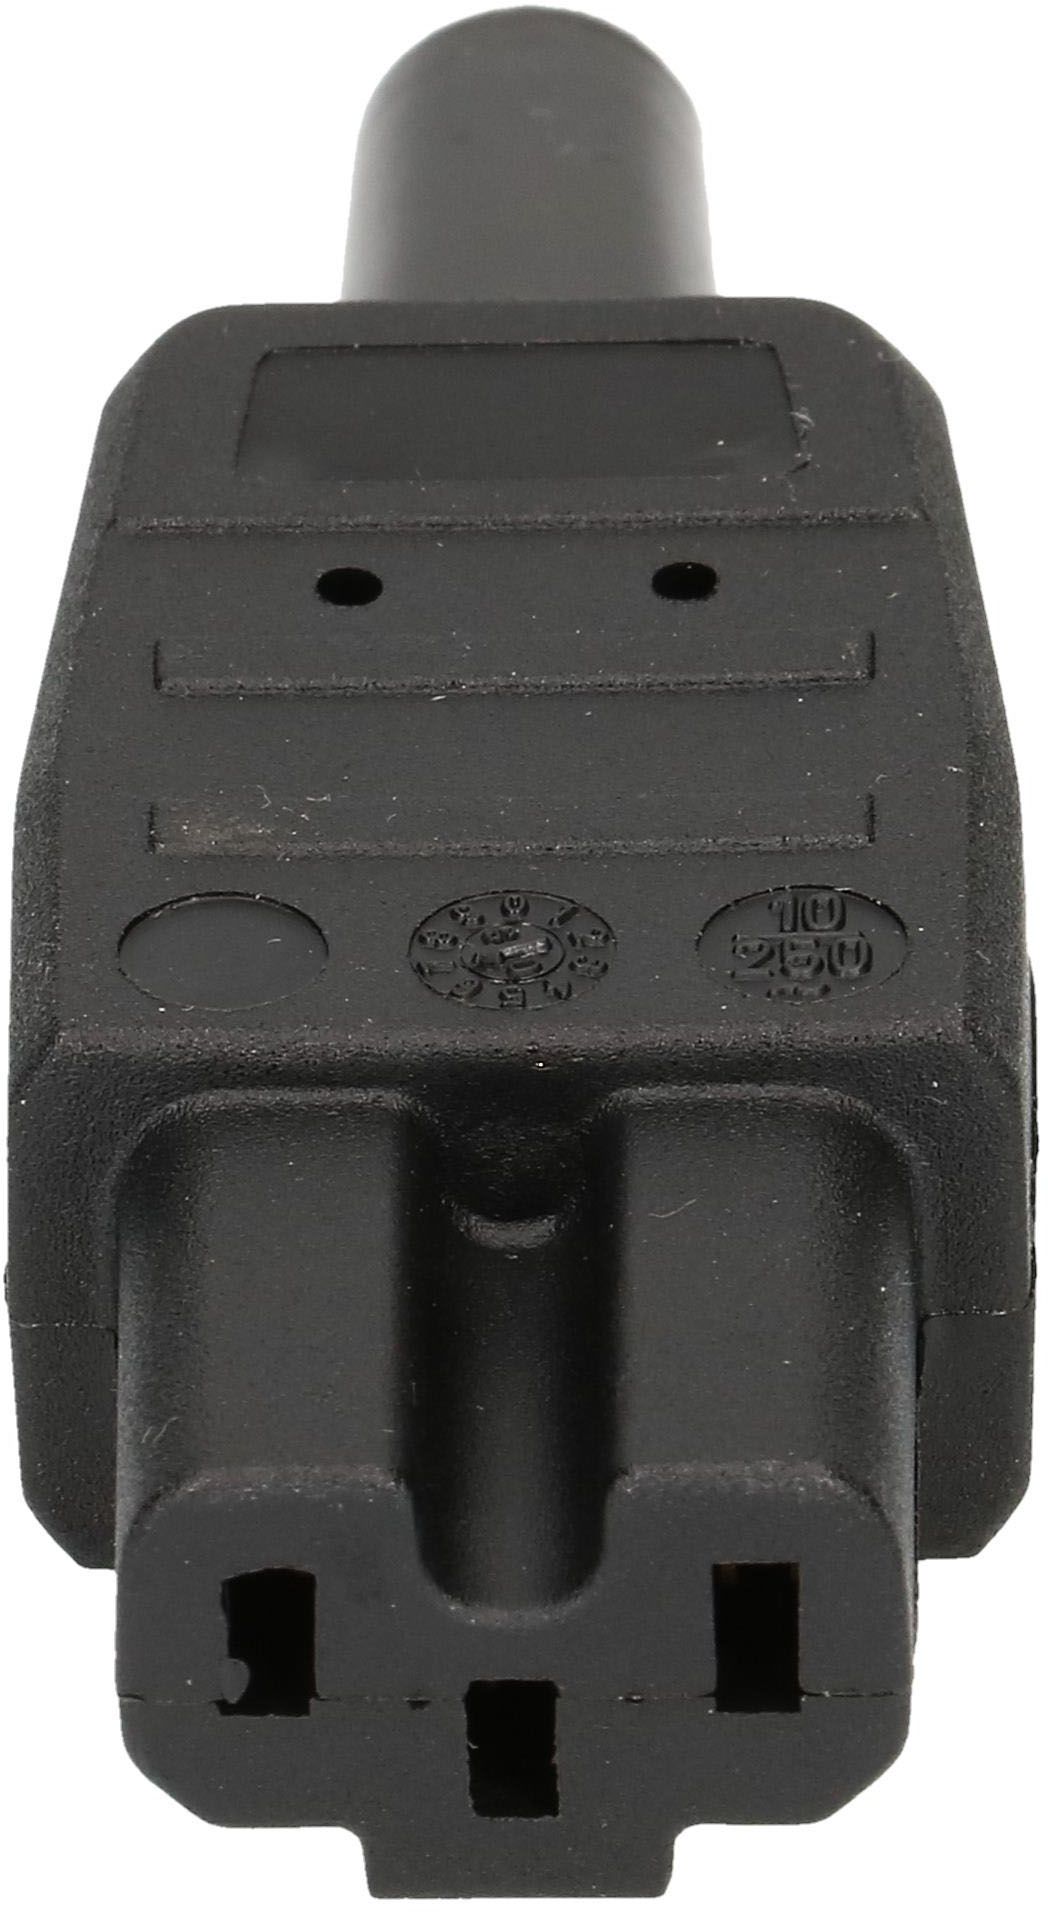 Apparatesteckdose Typ C15A 3-polig schwarz